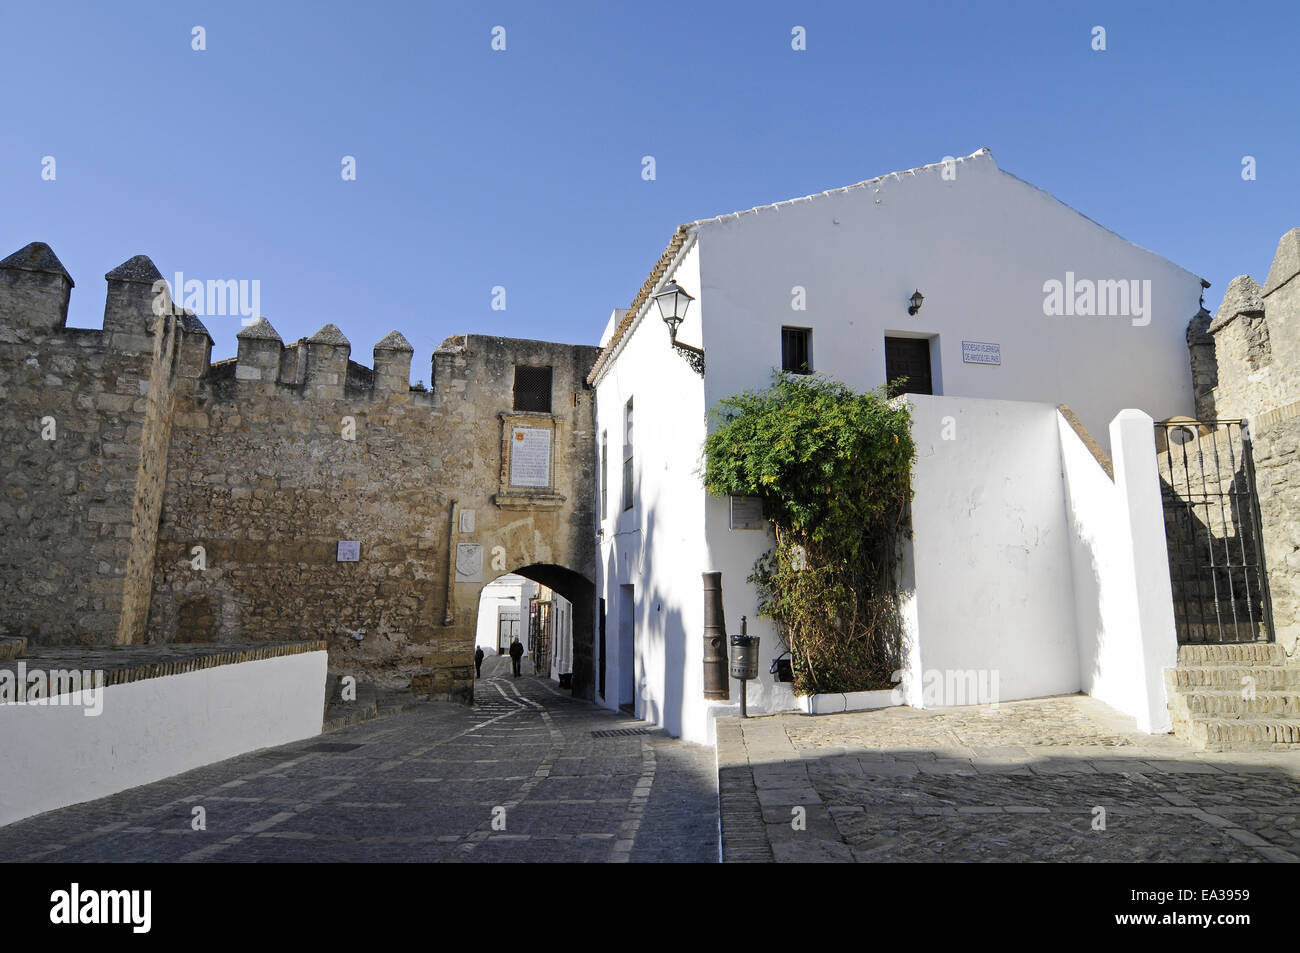 old town, Vejer de la Frontera, Spain Stock Photo